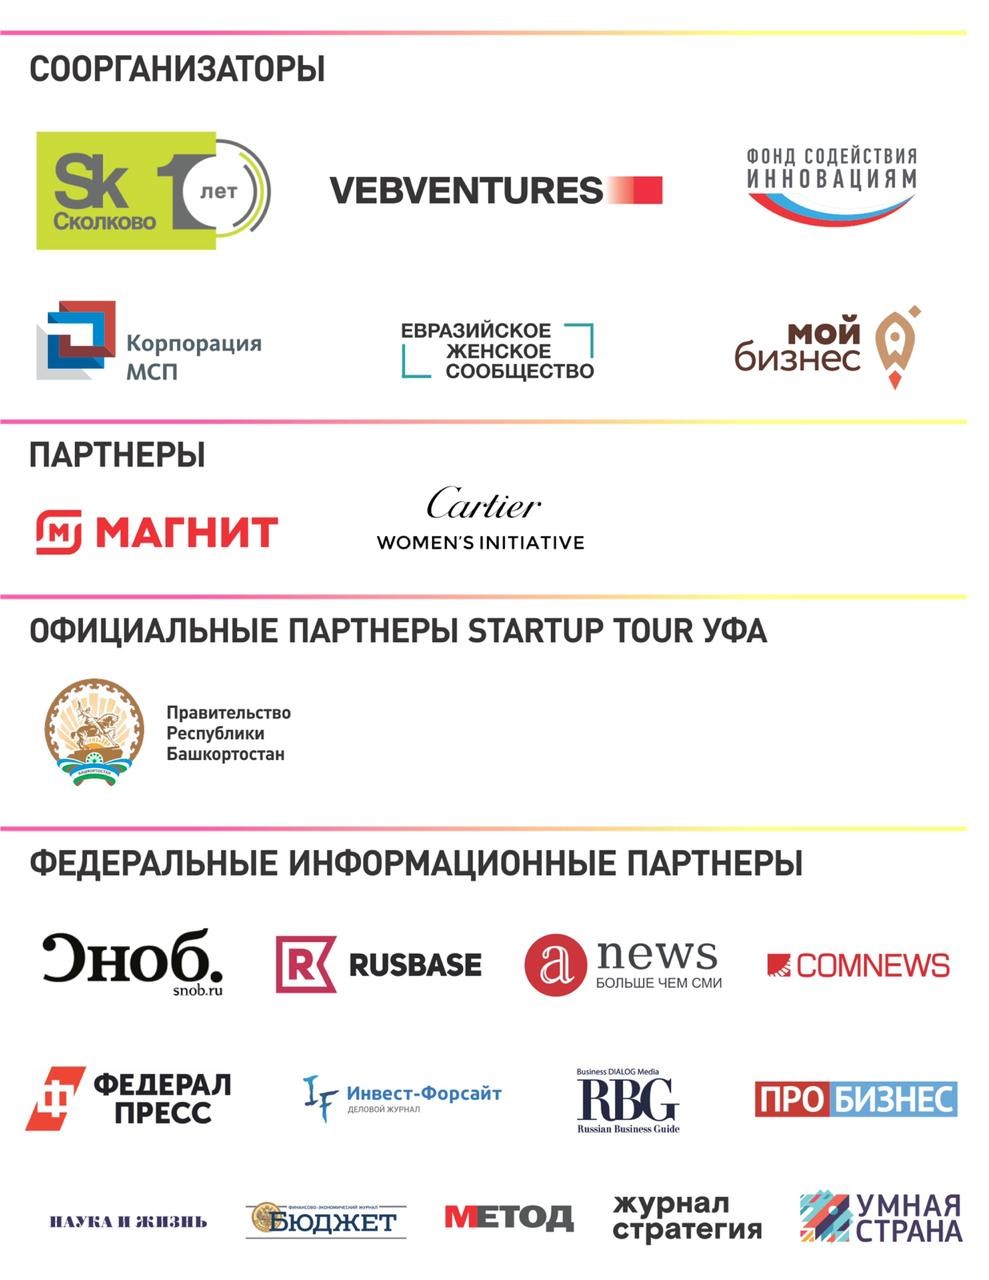 Open Innovations Startup Tour возвращается в Уфу